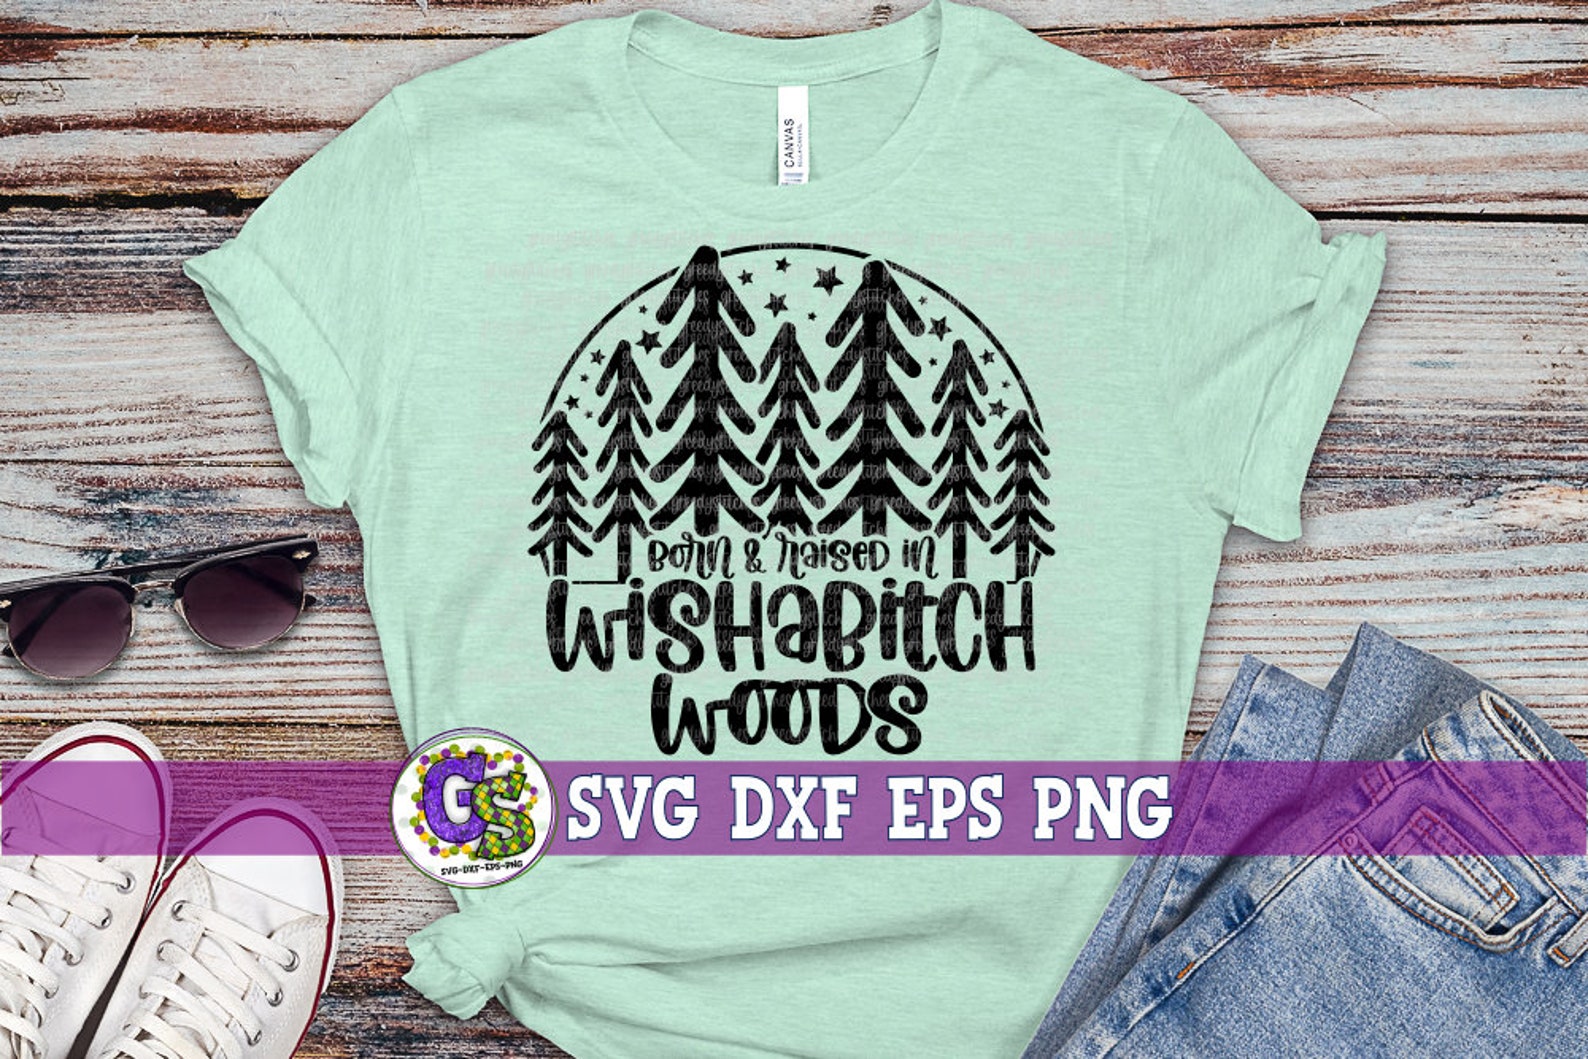 Born & Raised in Wishabitch Woods Svg Dxf Eps Png. Wishabitch - Etsy